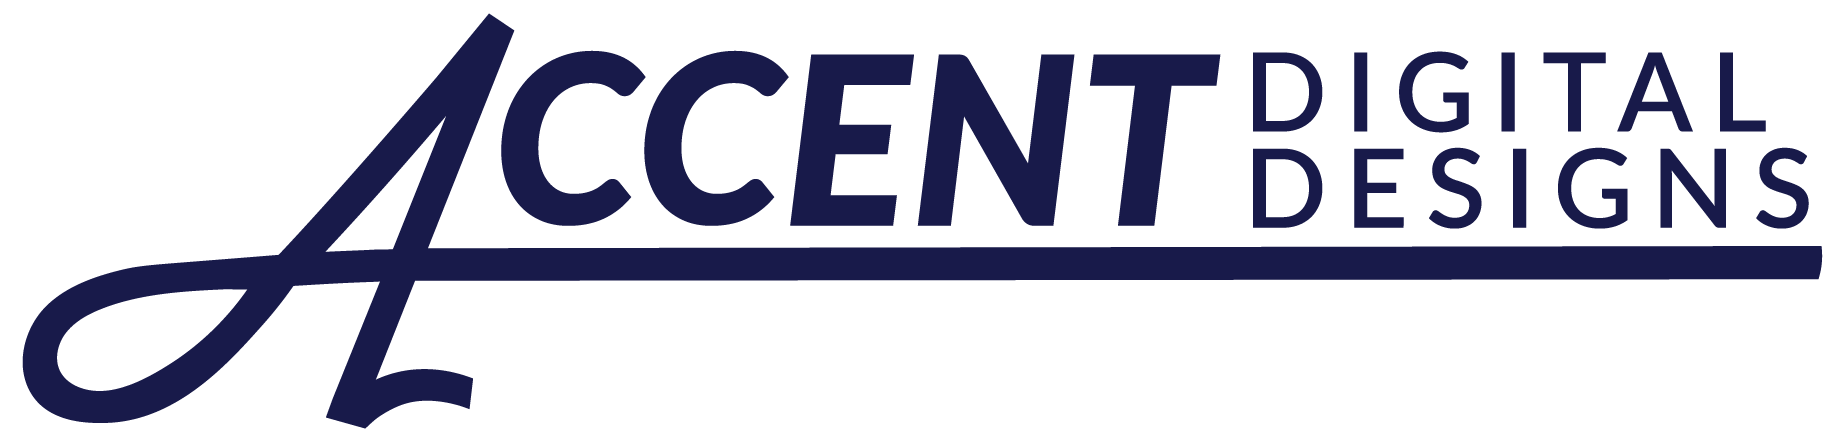 Accent Digital Designs logo